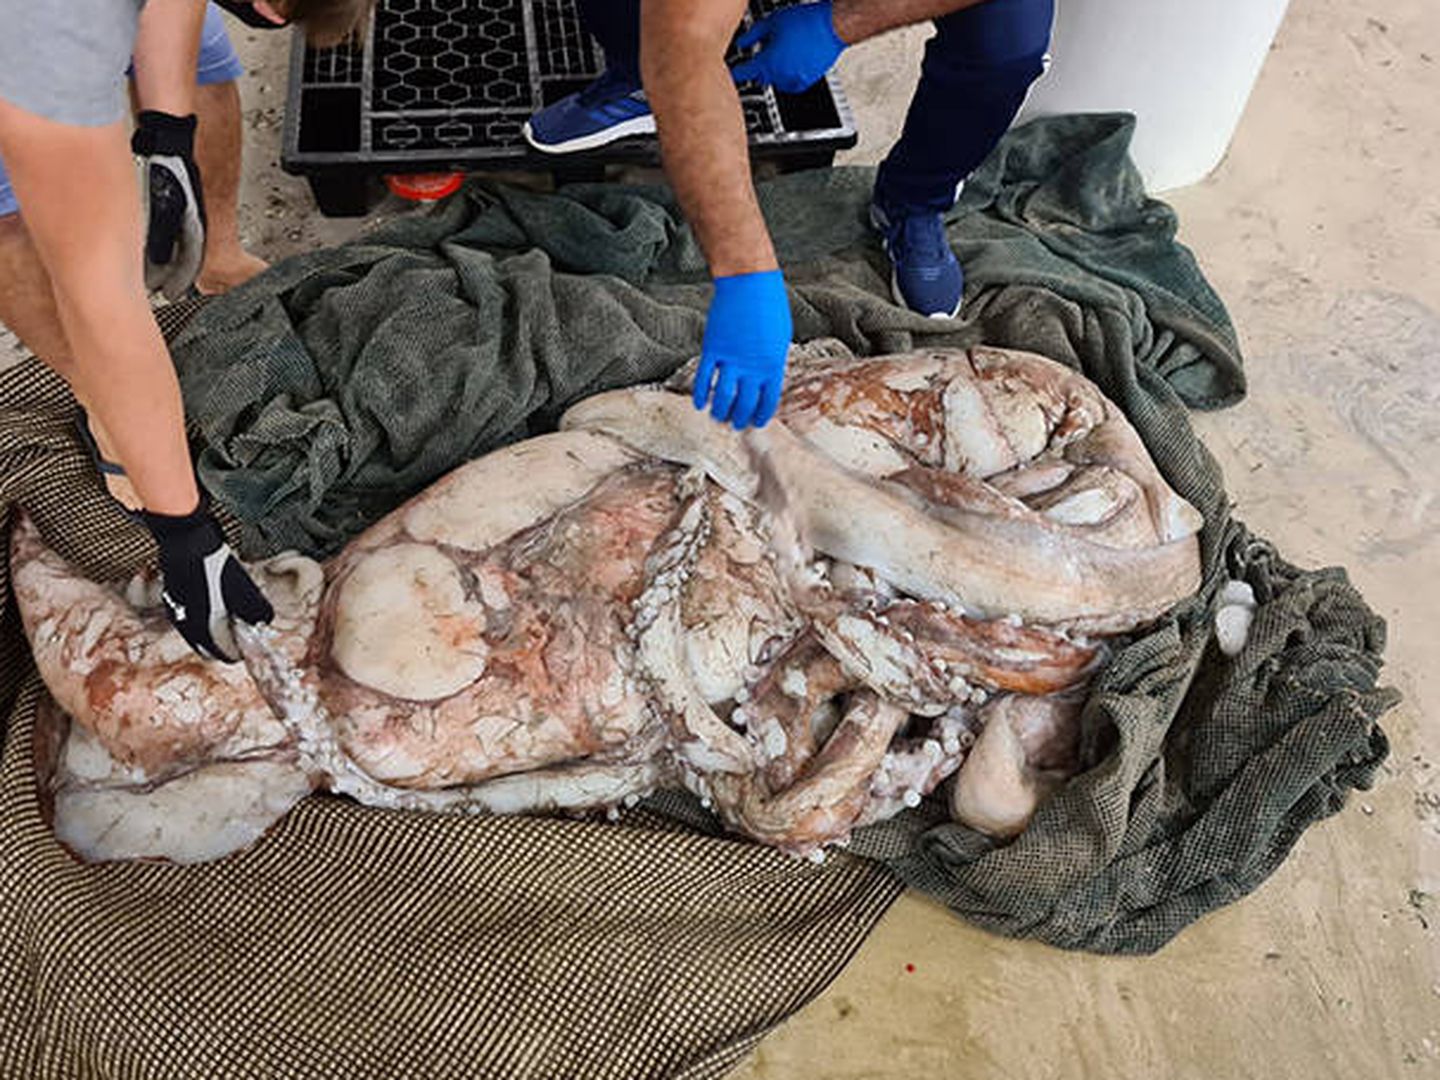 El calamar gigante será analizado tras la pandemia. Foto: Iziko Museums of South Africa